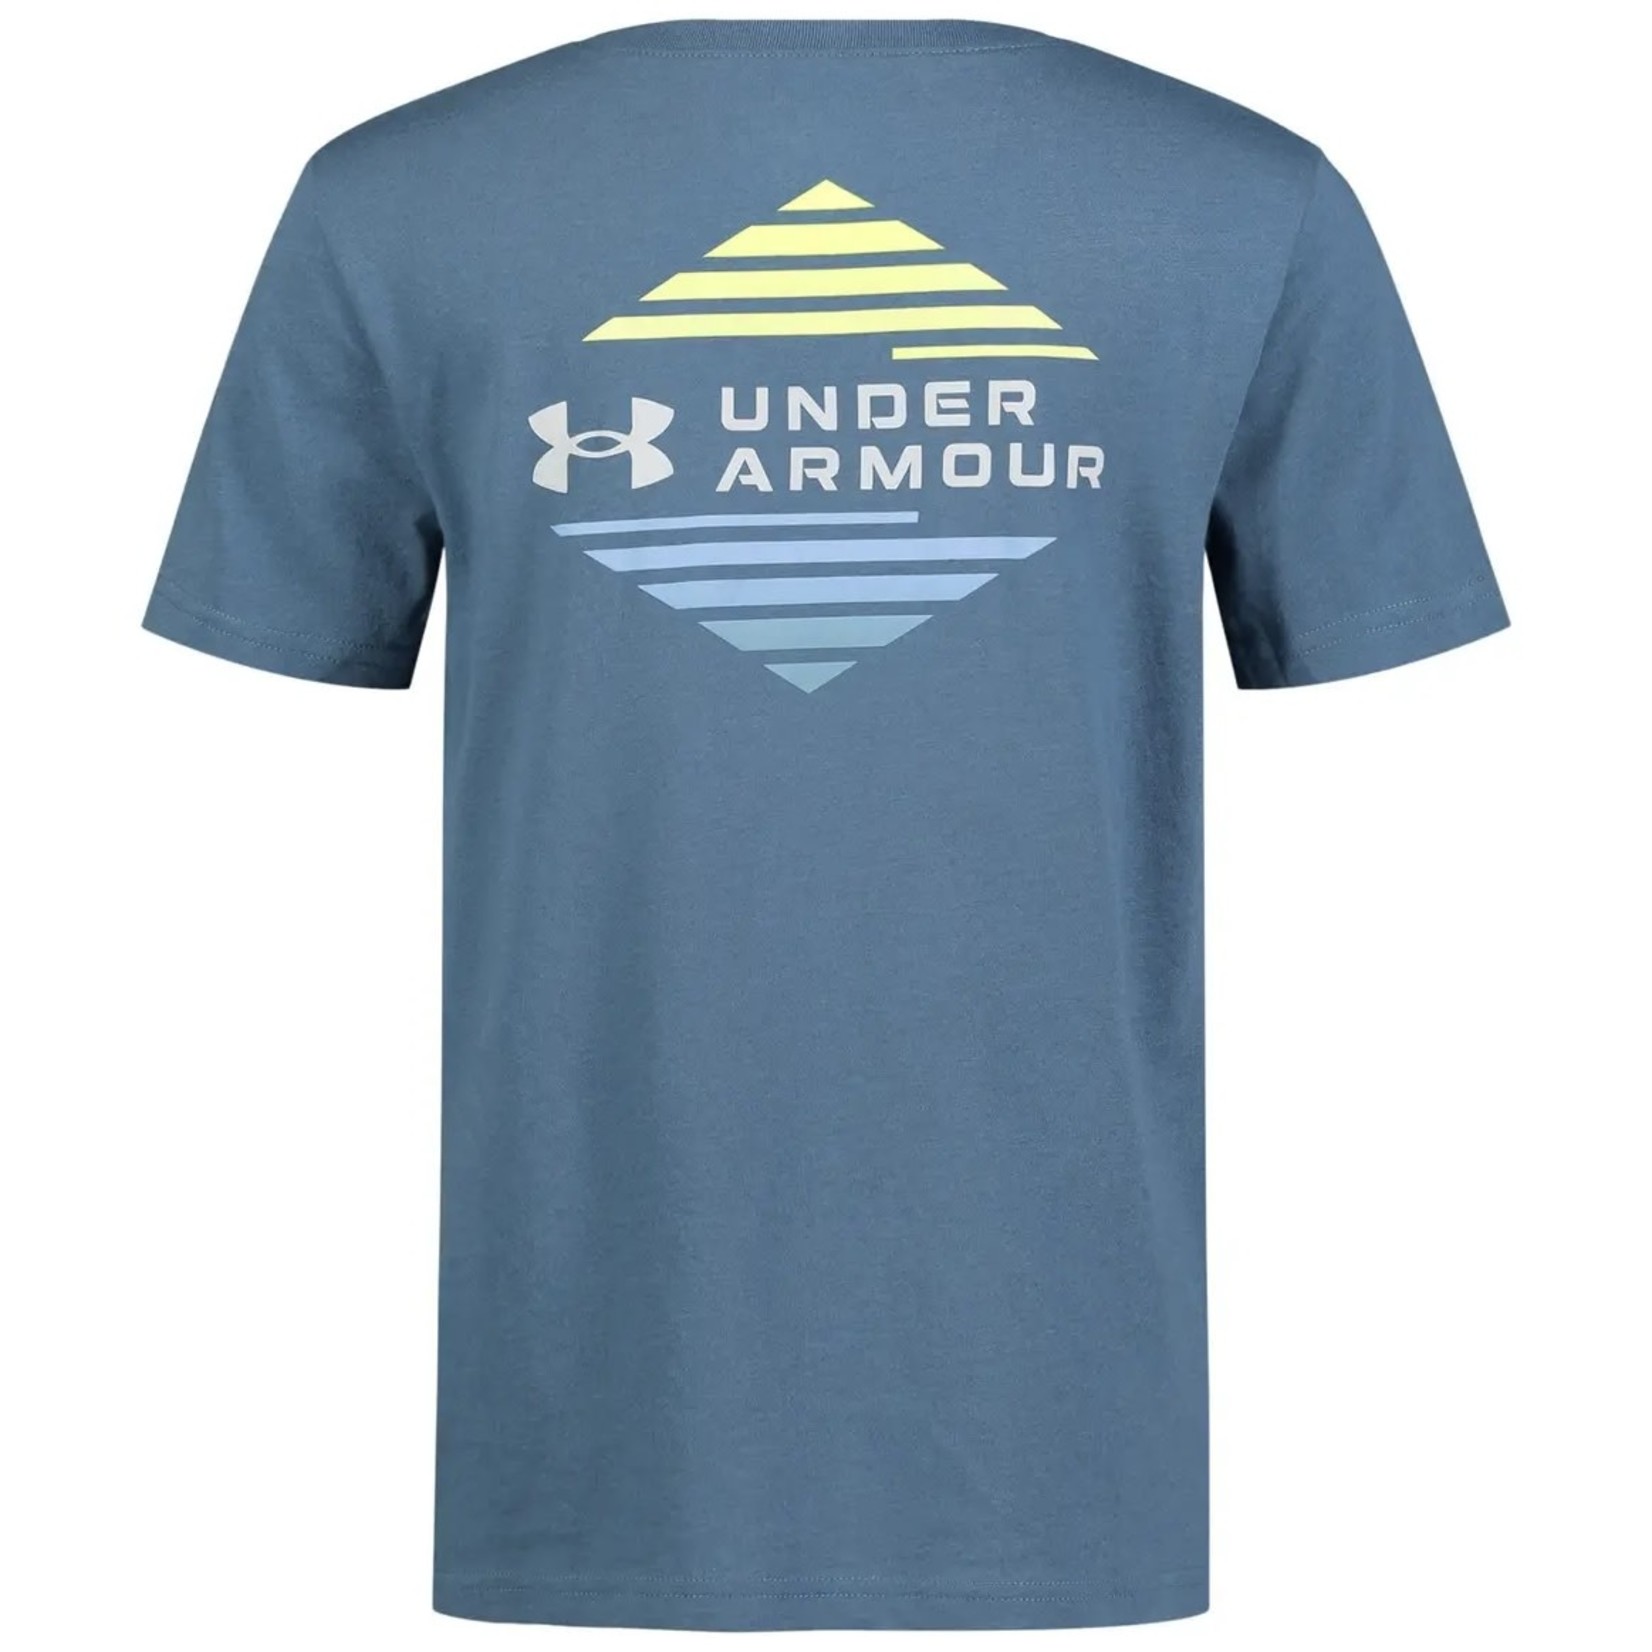 Under Armour Under Armour - Horizon Logo S/S Tee